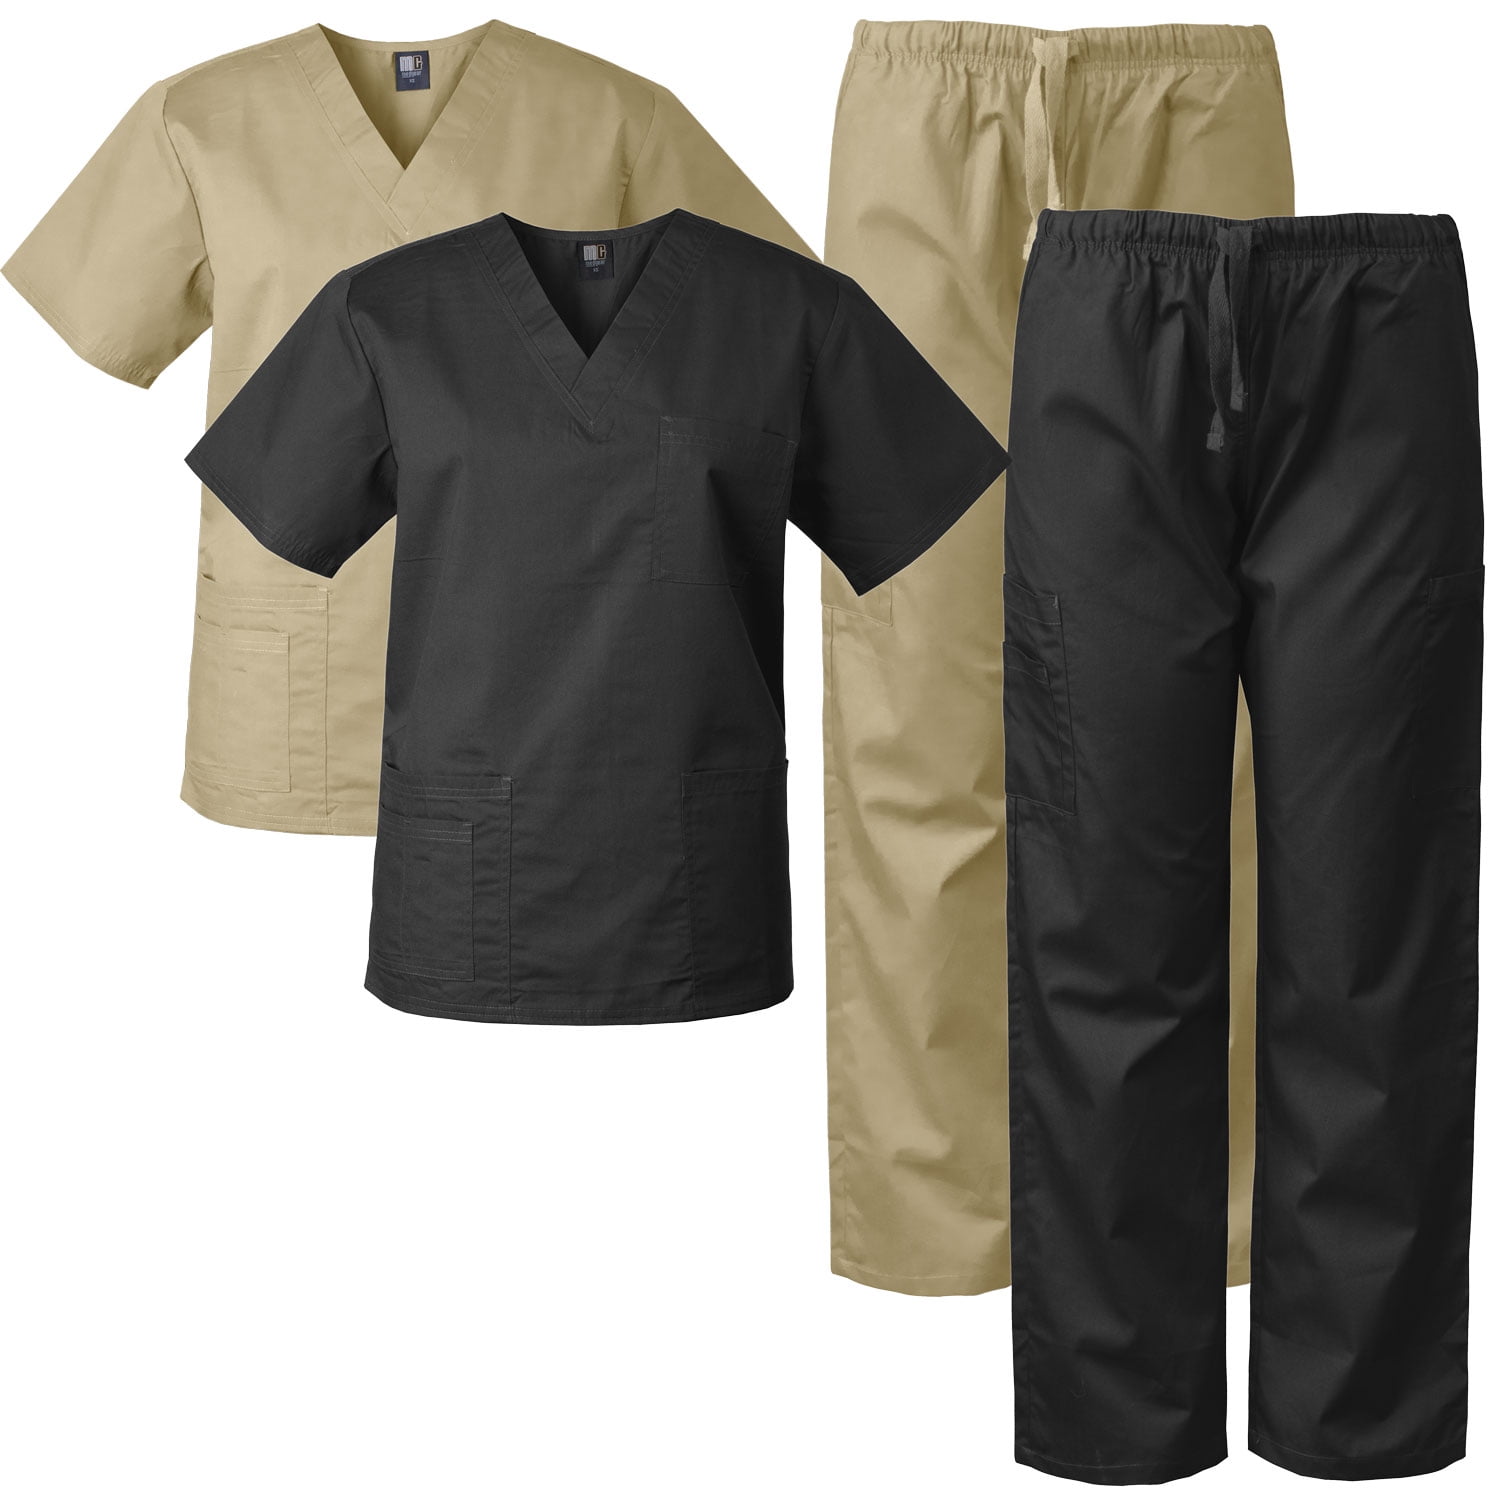 Medgear Women’s Scrubs Set Multi-Pocket Top & Pants Medical Uniform DOCH 